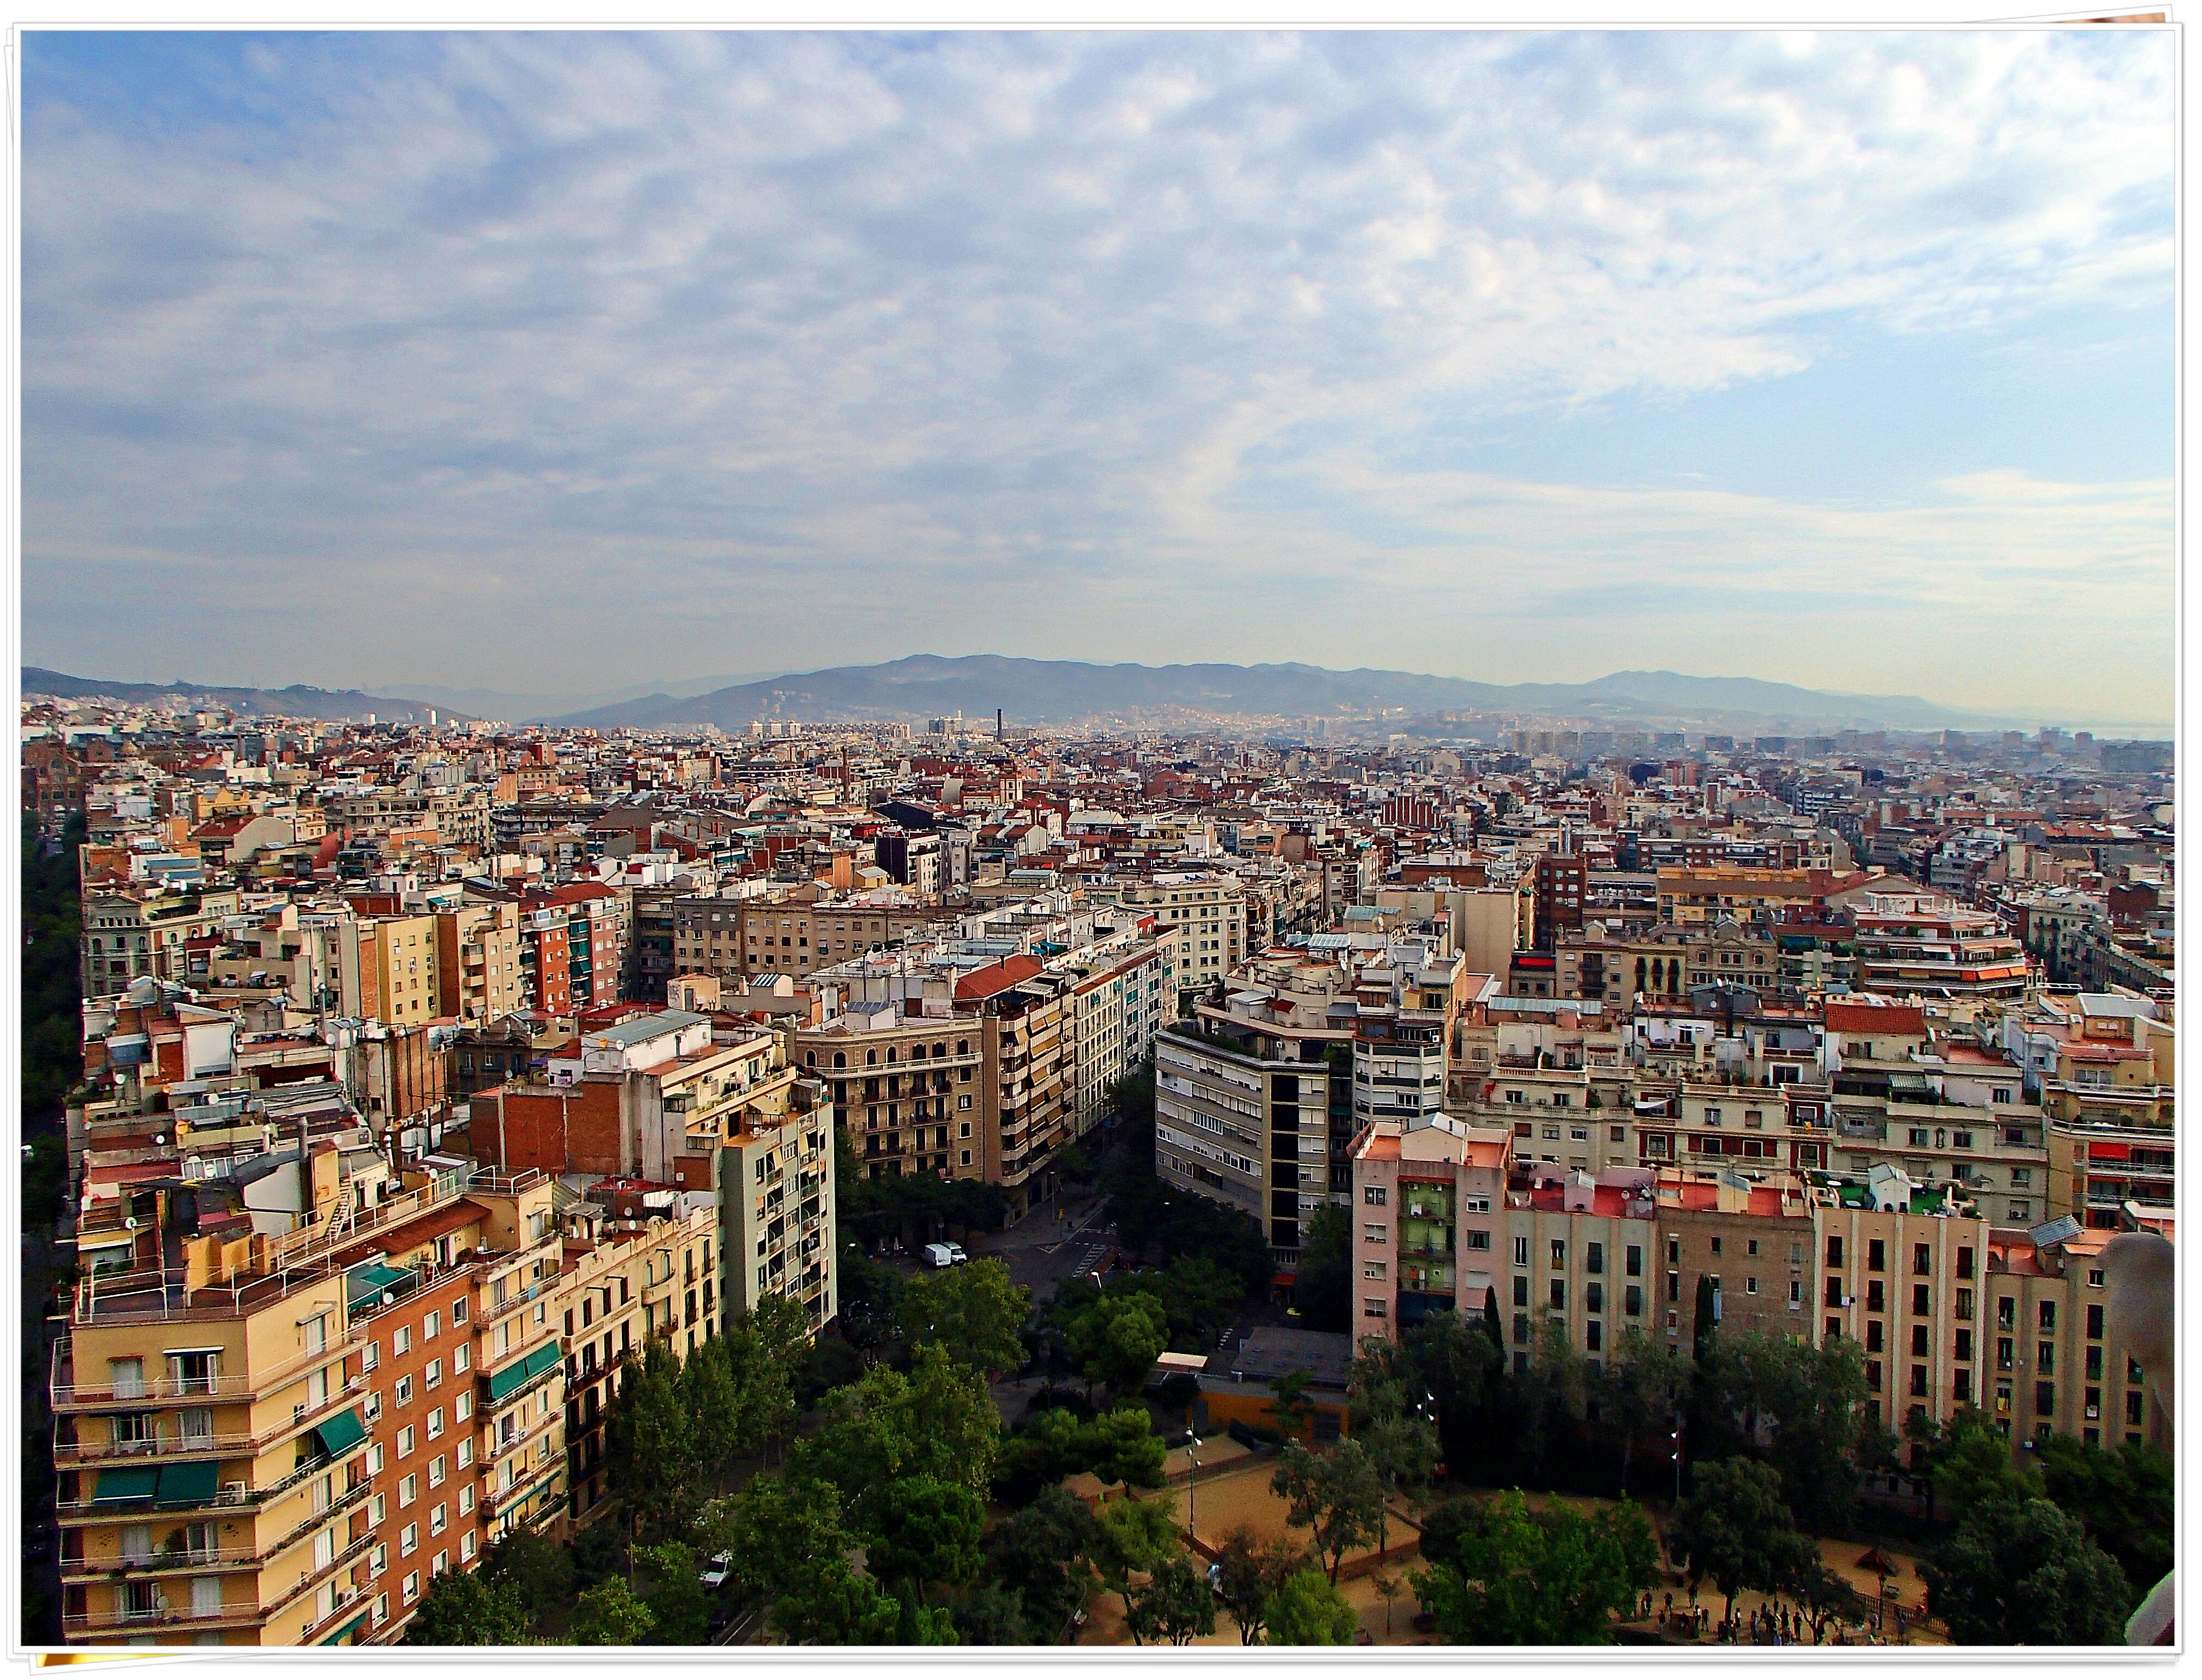 Overlooking Barcelona from on top of the Basilica de la Sagrada Familia